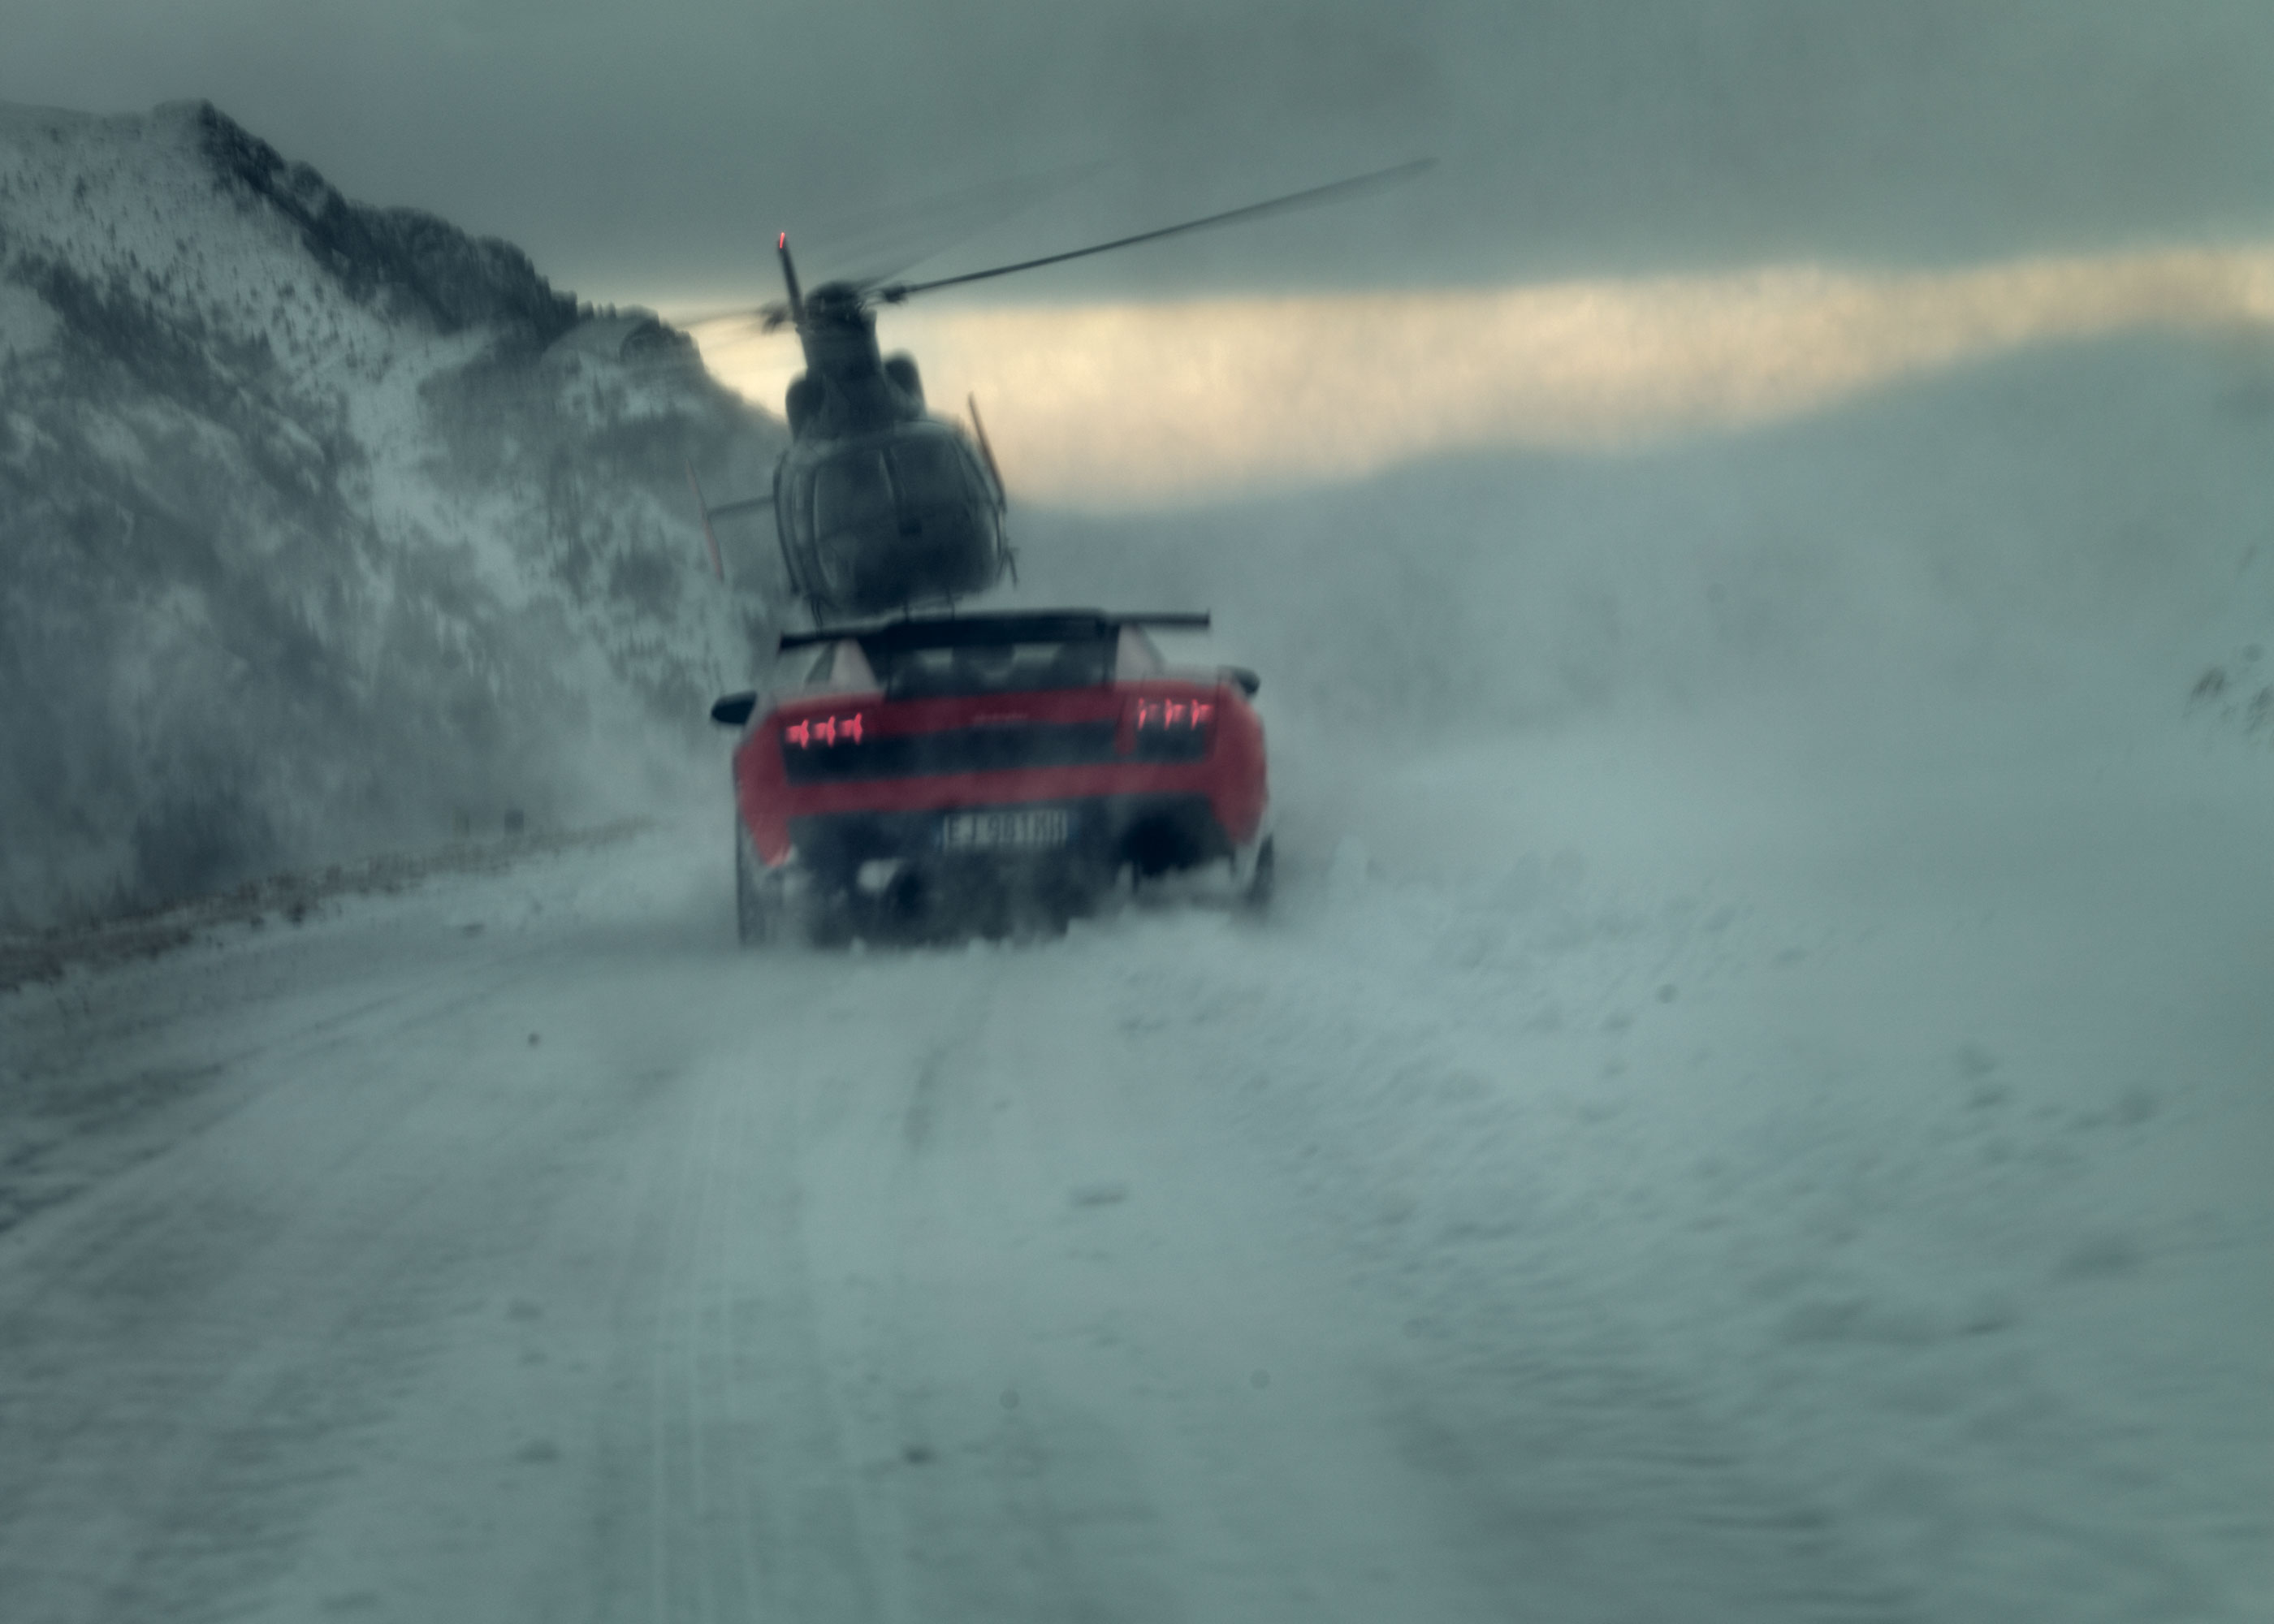 Olaf Hauschulz, Lamborghini Gallardo Super Trofeo Stradale, Transfăgărășan, Snow, Route 7C